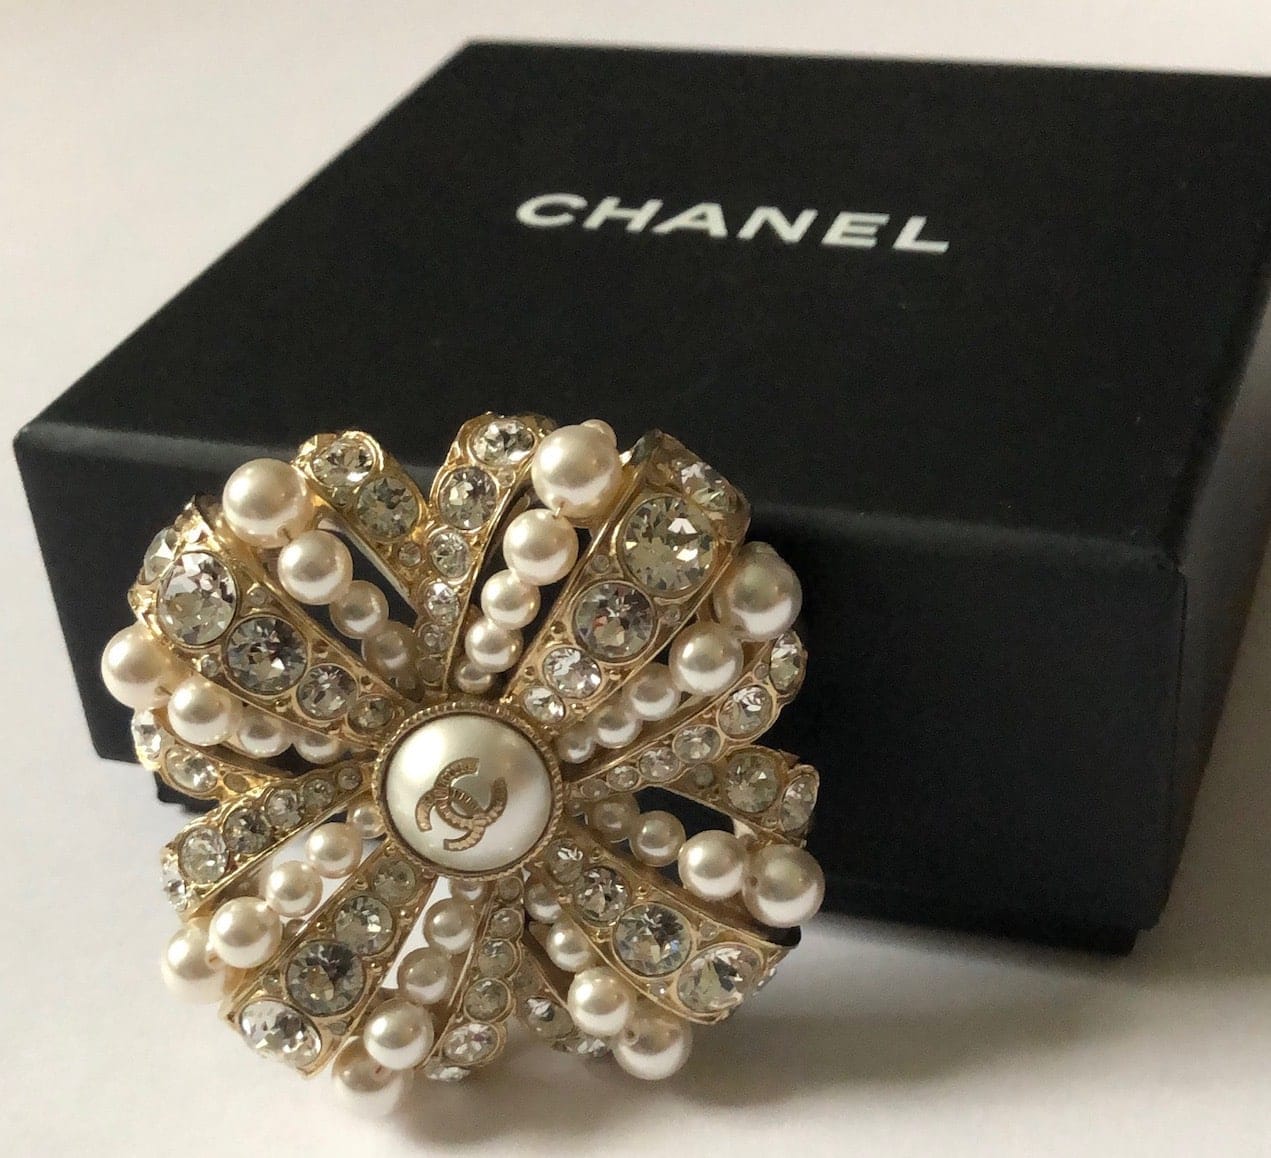 CHANEL, Jewelry, Chanel Brooch Pin